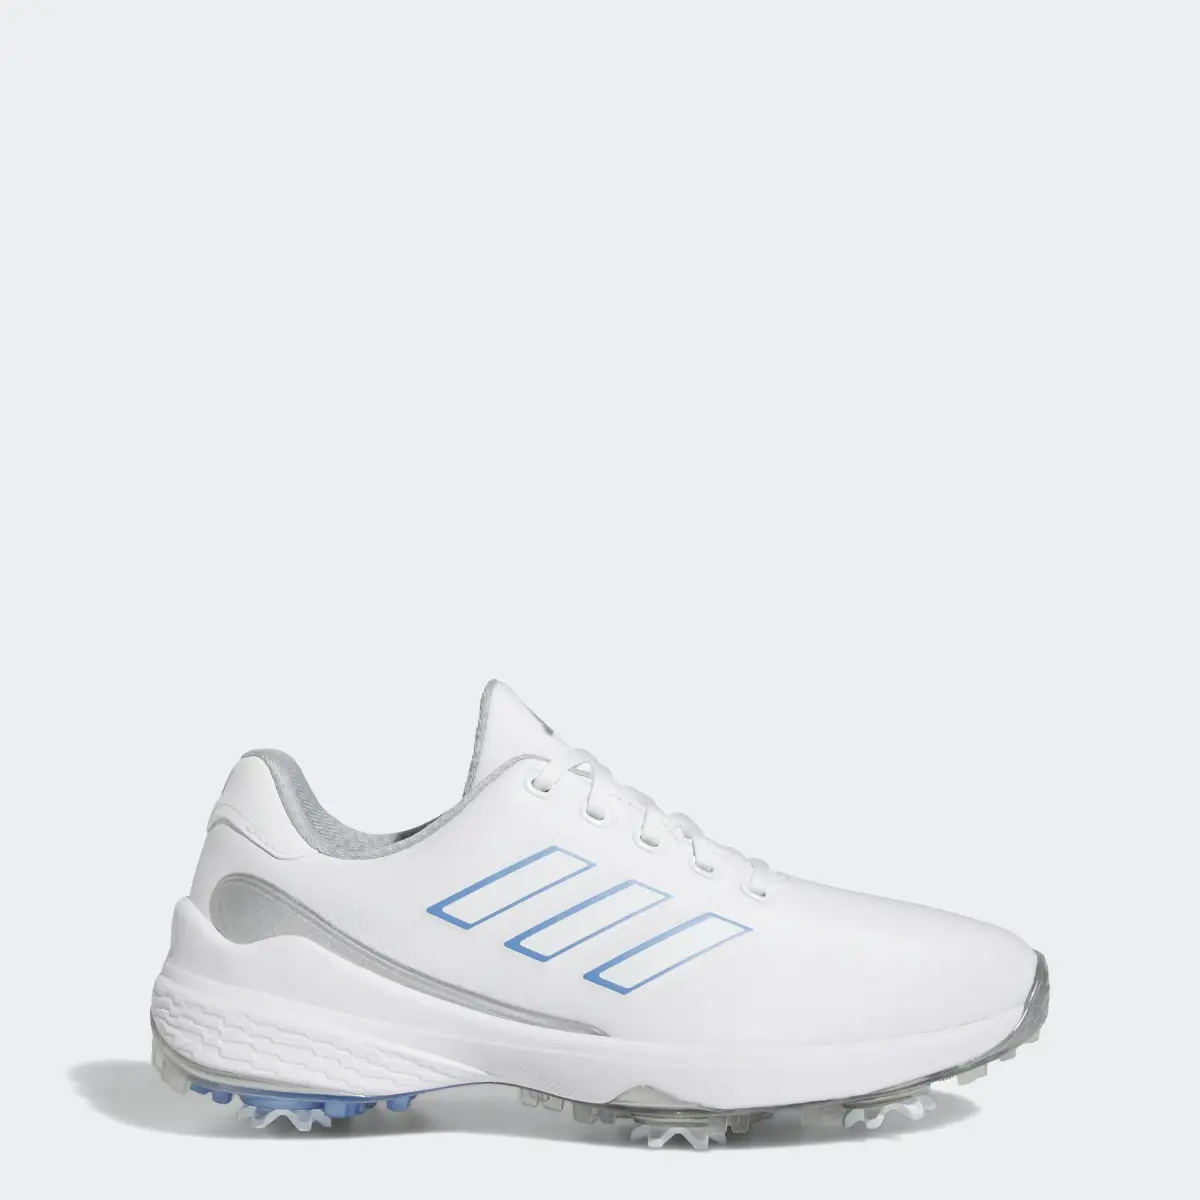 Adidas ZG23 Lightstrike Golf Shoes. 1